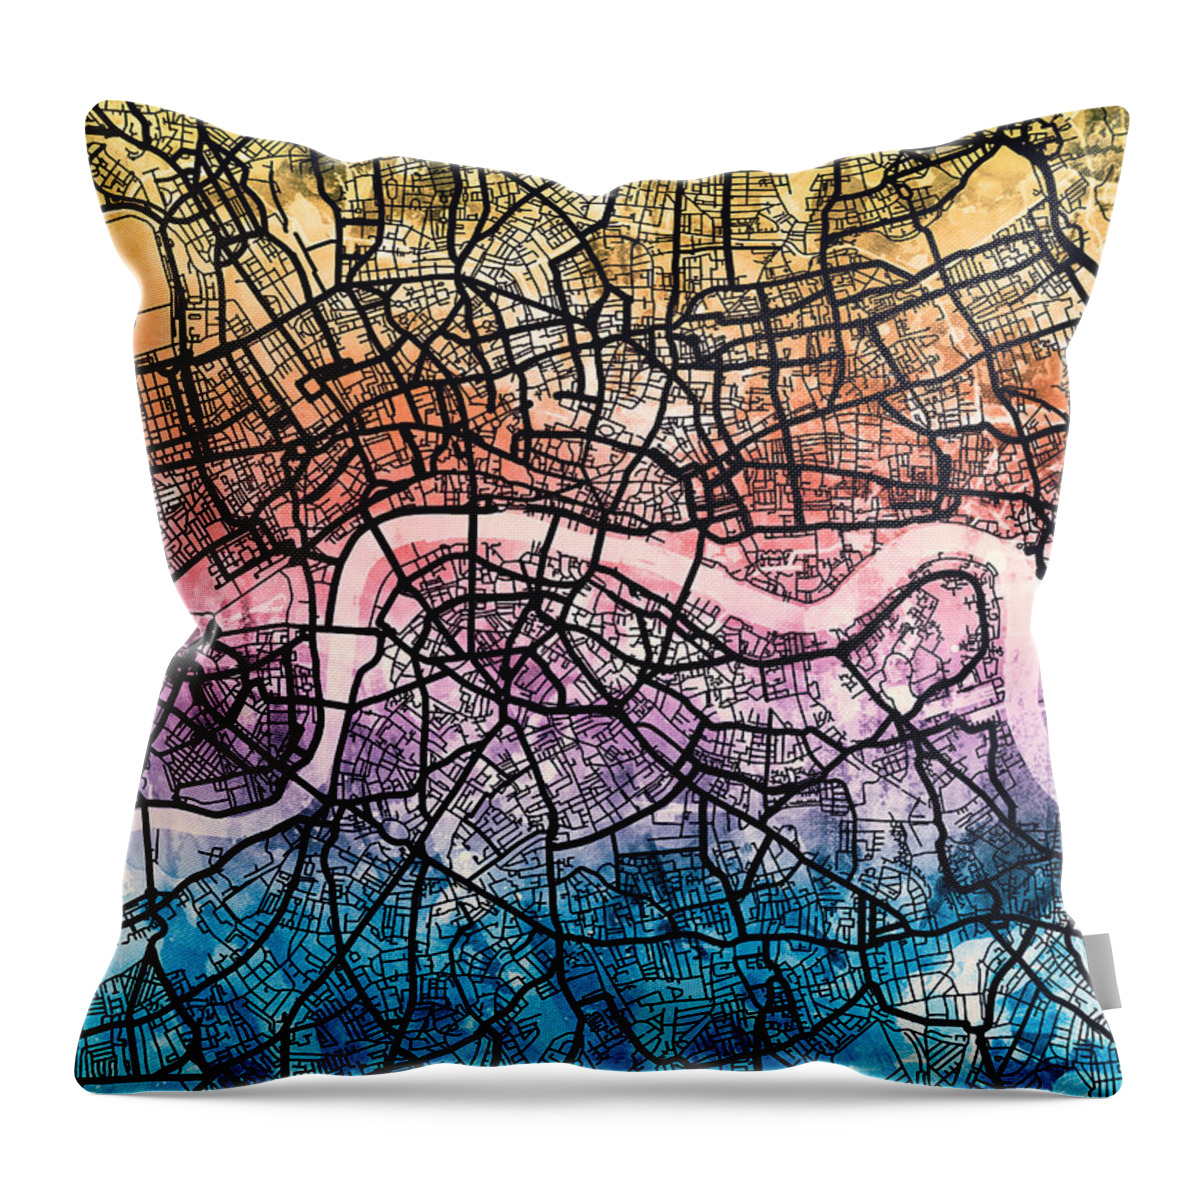 London Throw Pillow featuring the digital art London England Street Map by Michael Tompsett